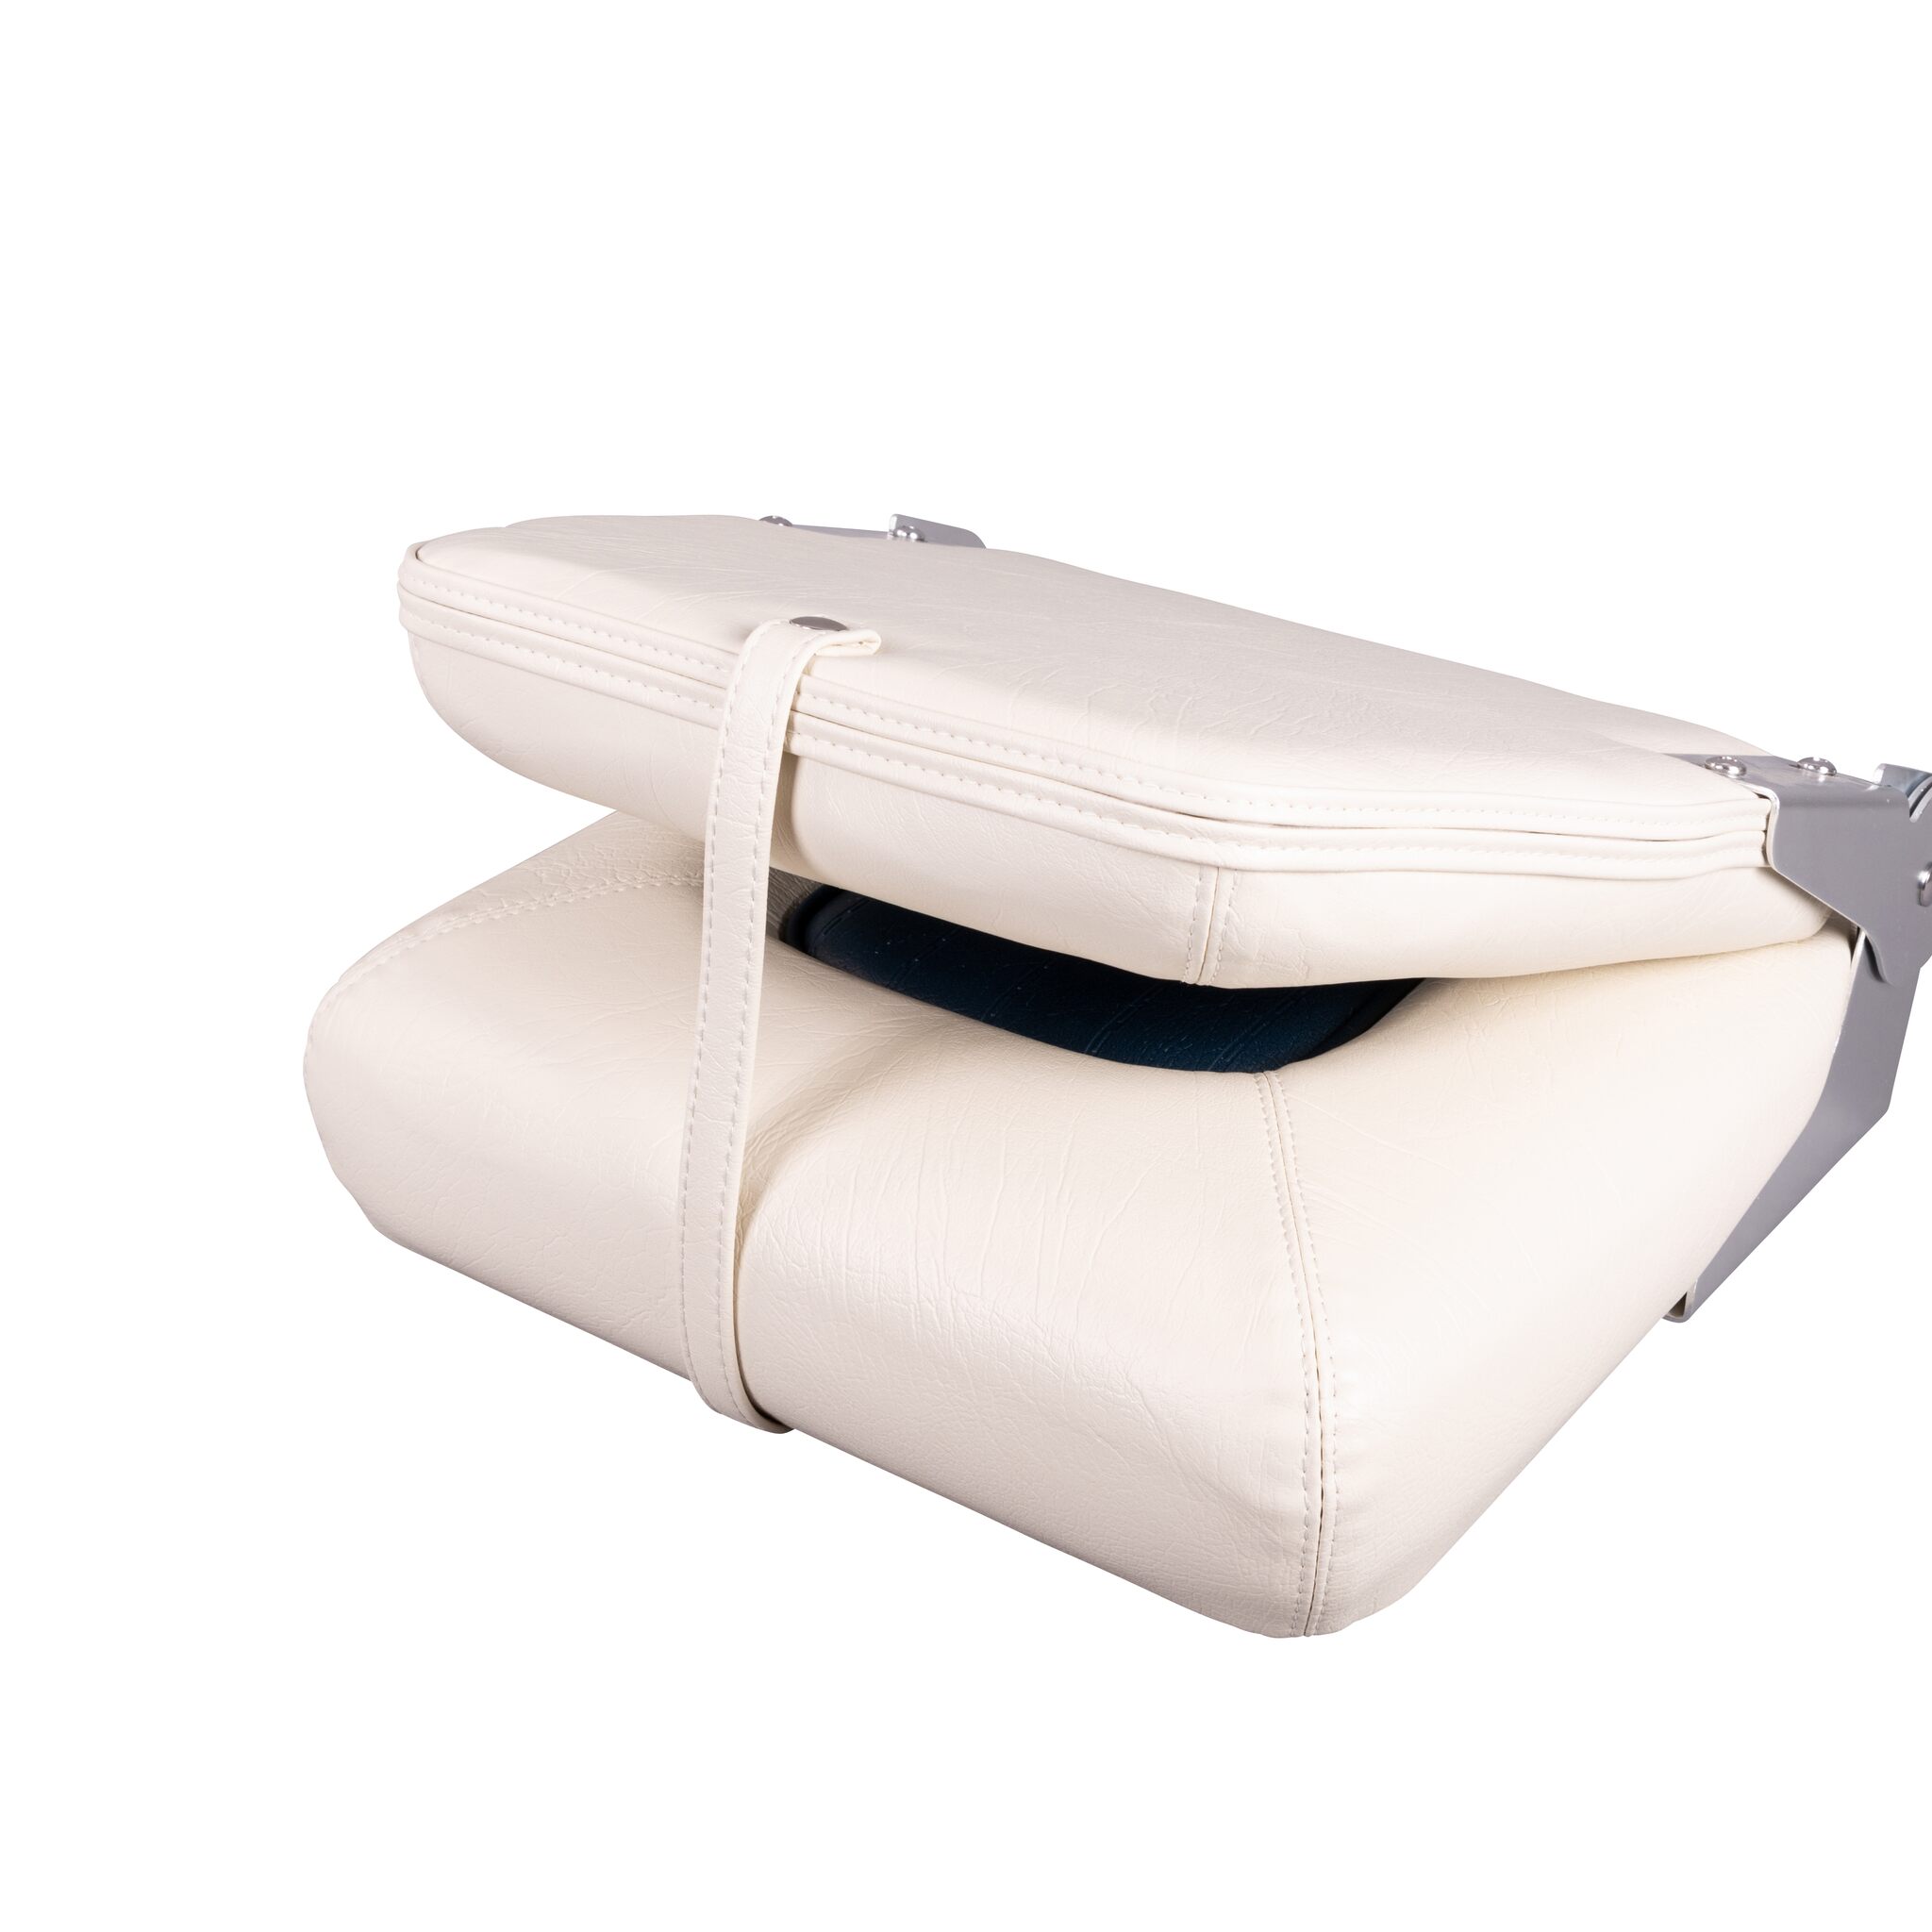 SPRINGFIELD Motorboat seat COACH, foldable single seat